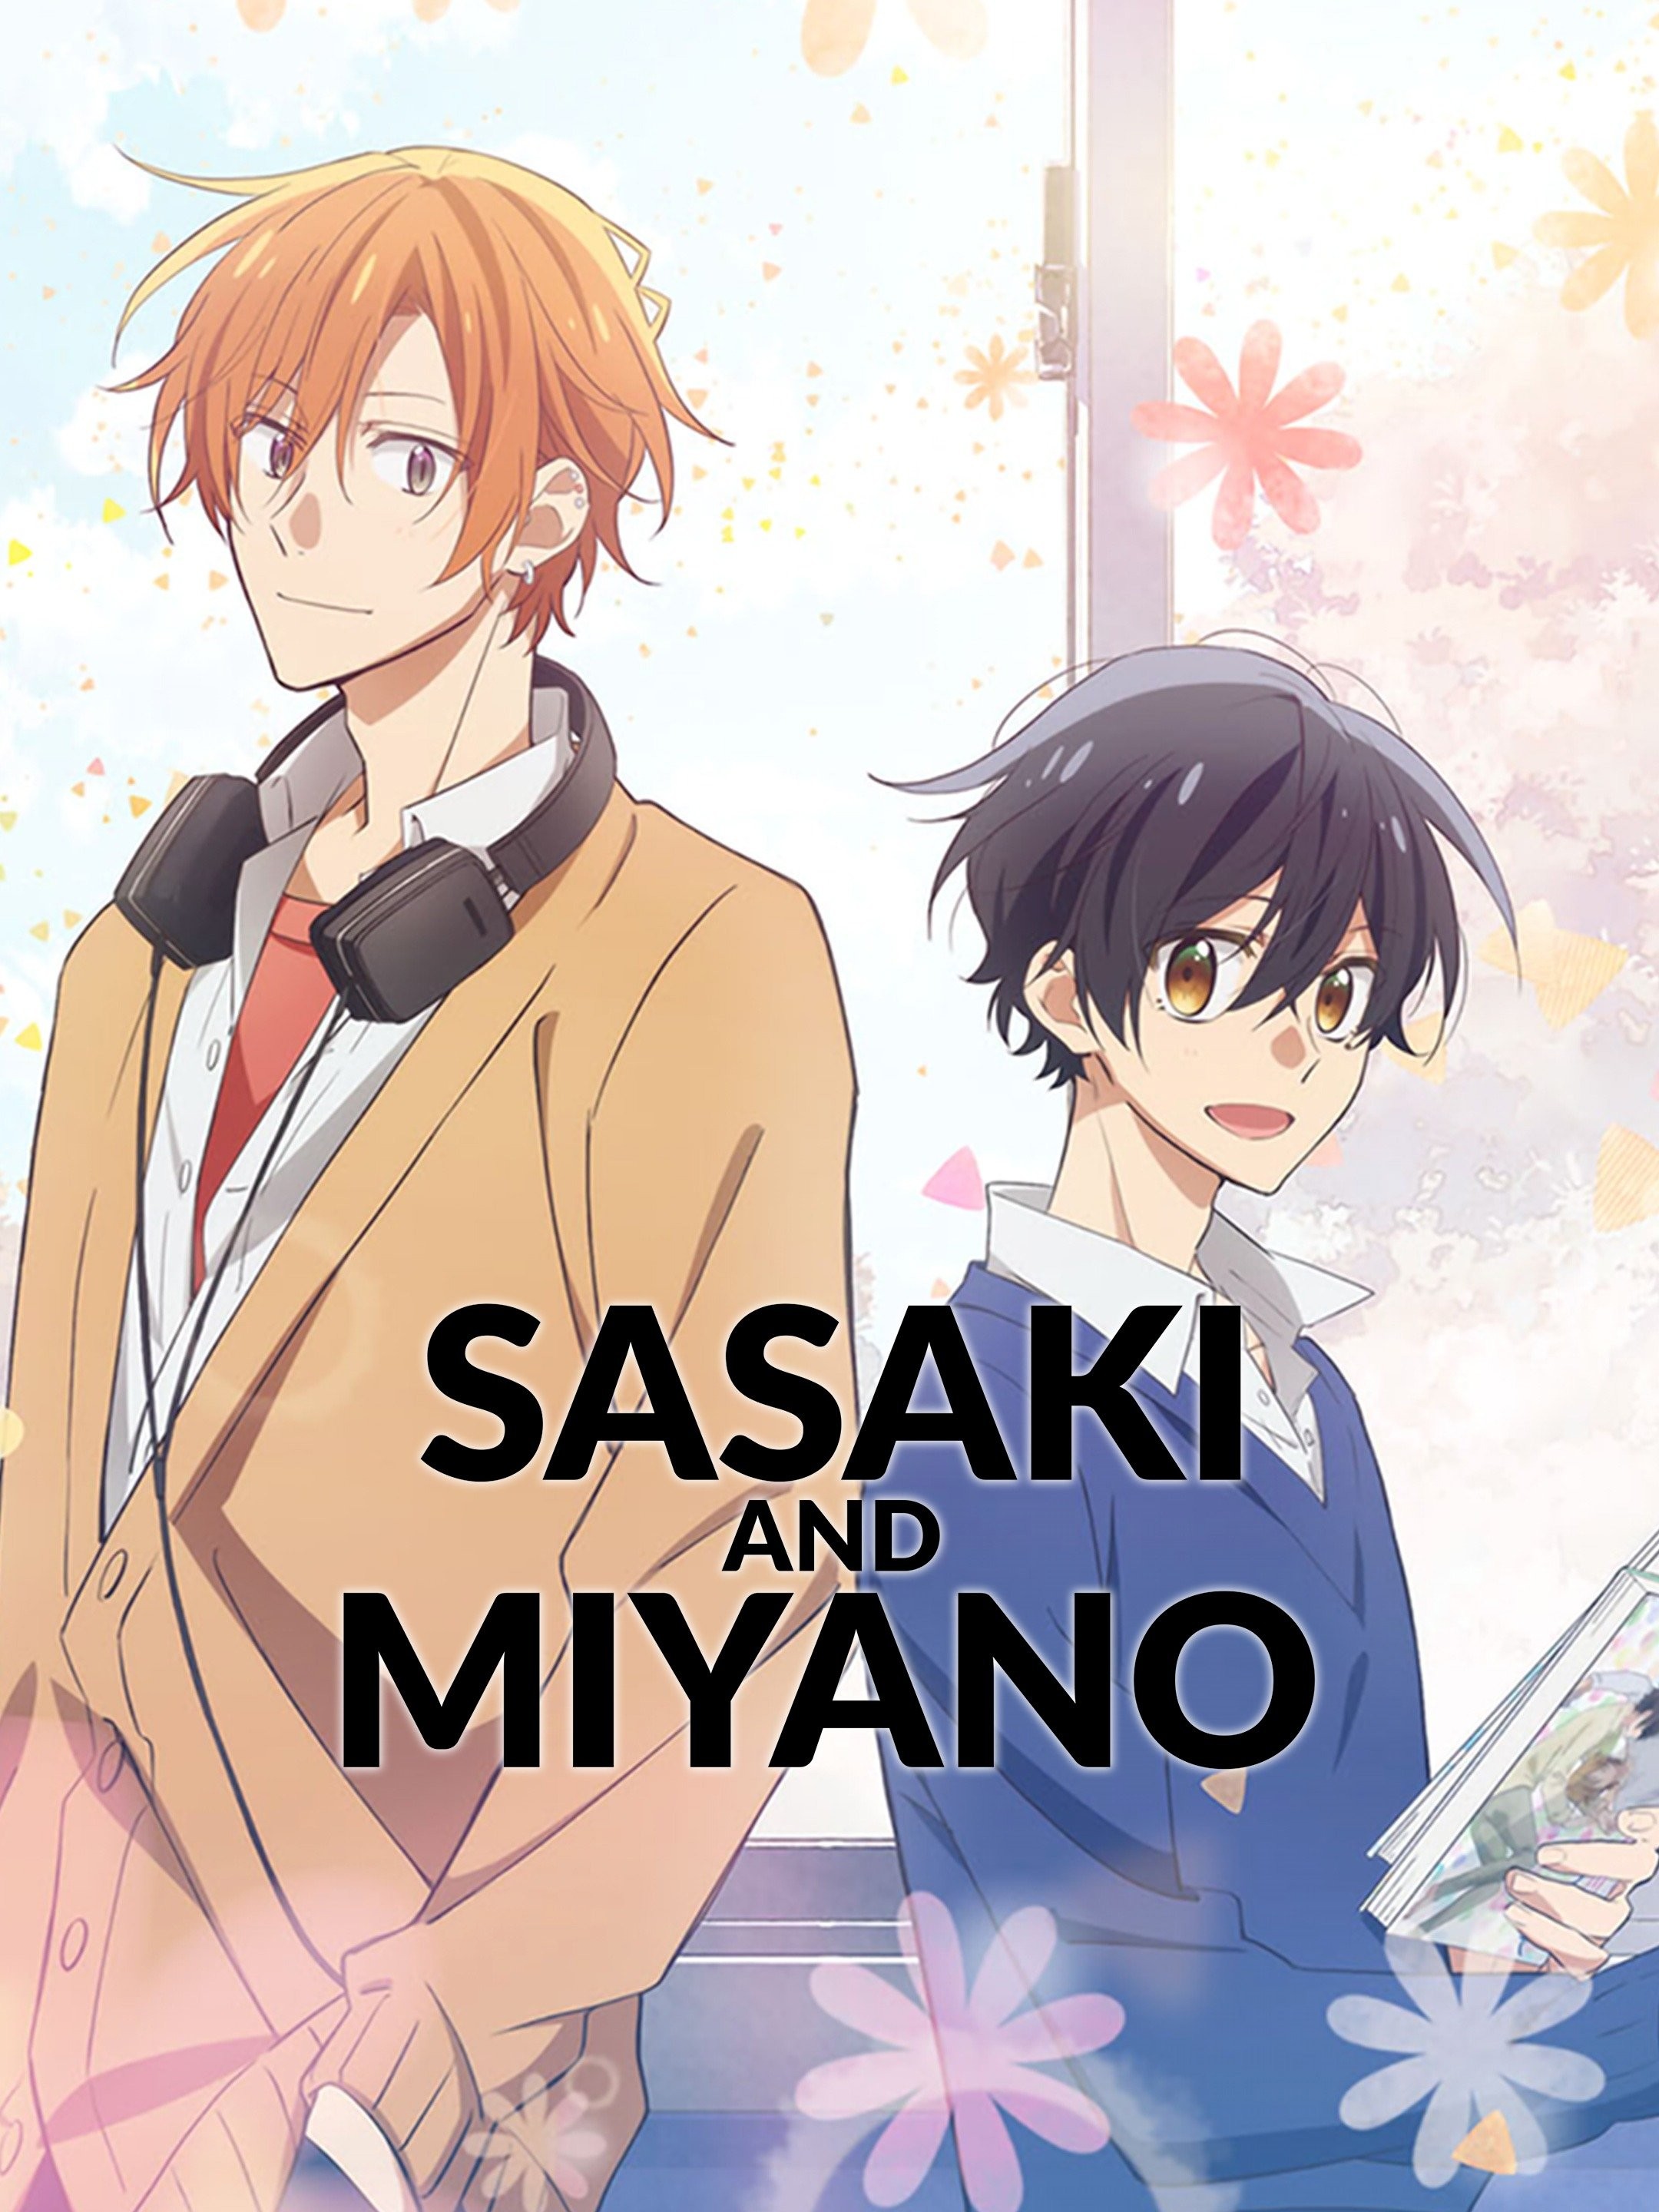 New Sasaki and Miyano Anime Project Announced